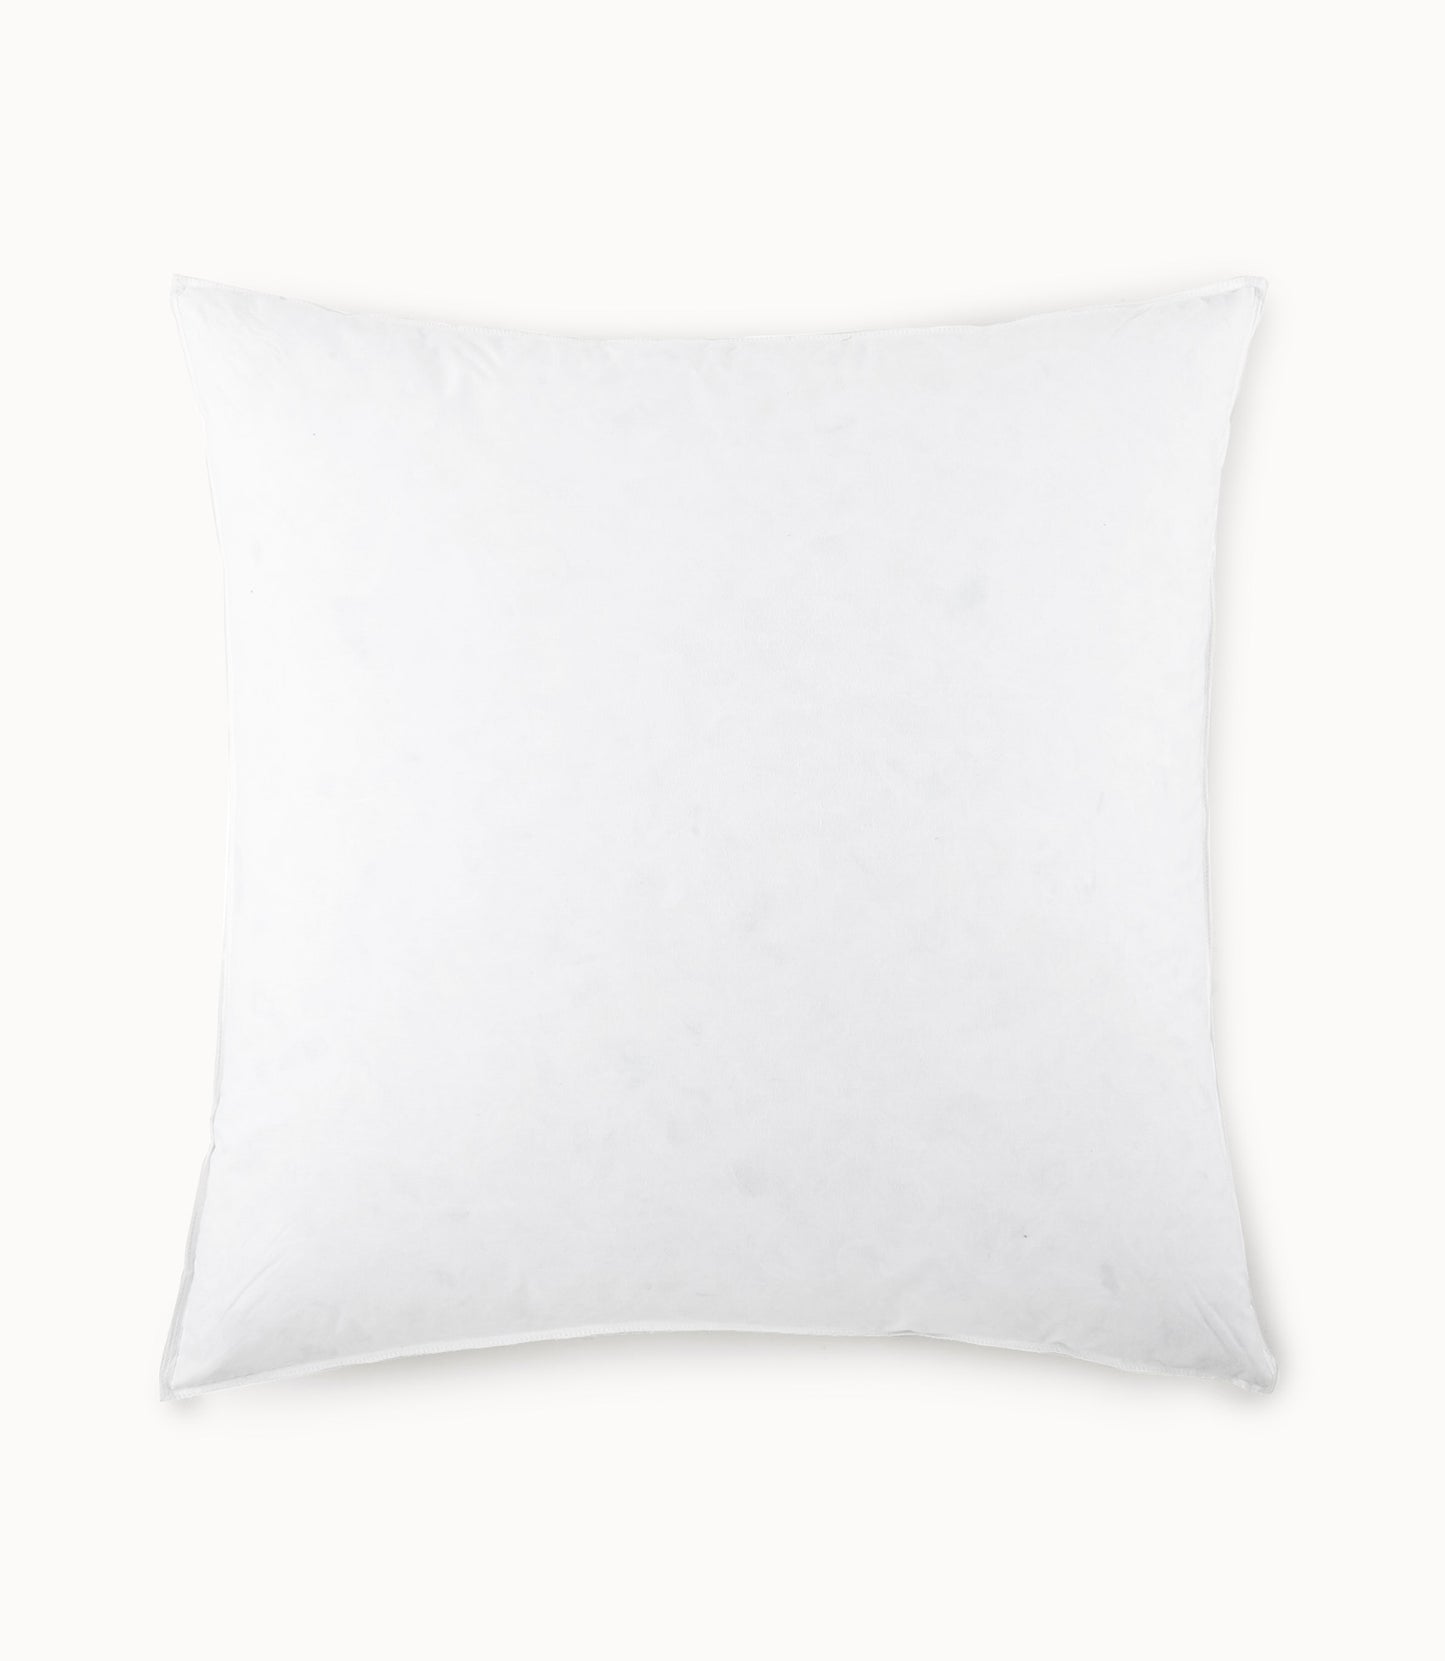  Cushion Filler - Throw Pillows / Decorative Pillows